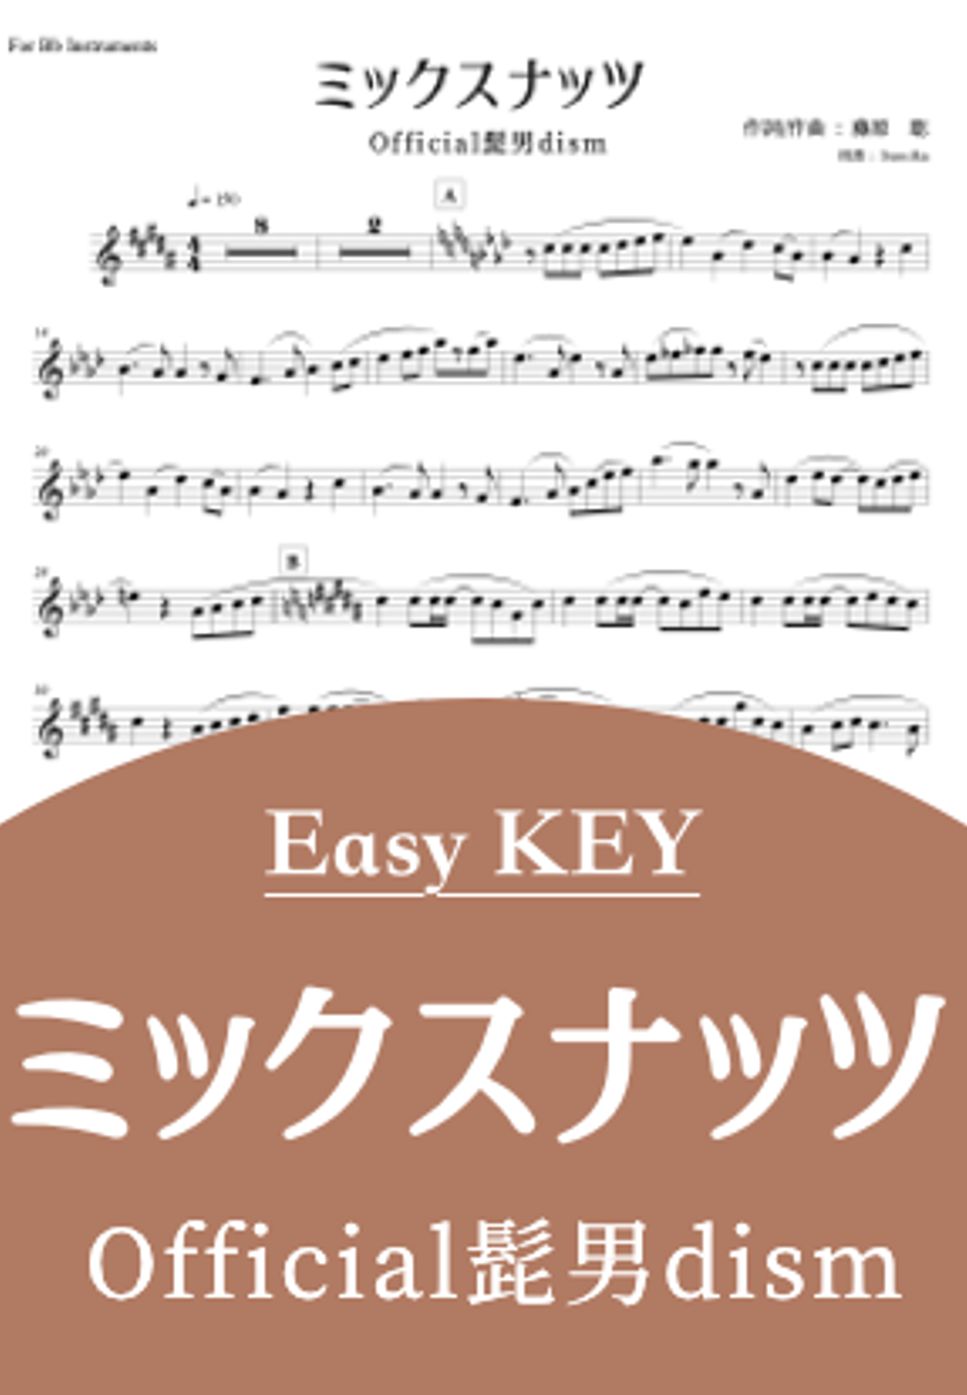 SPY×Family - ミックスナッツ (初級者向け Easy Key) by Sumika